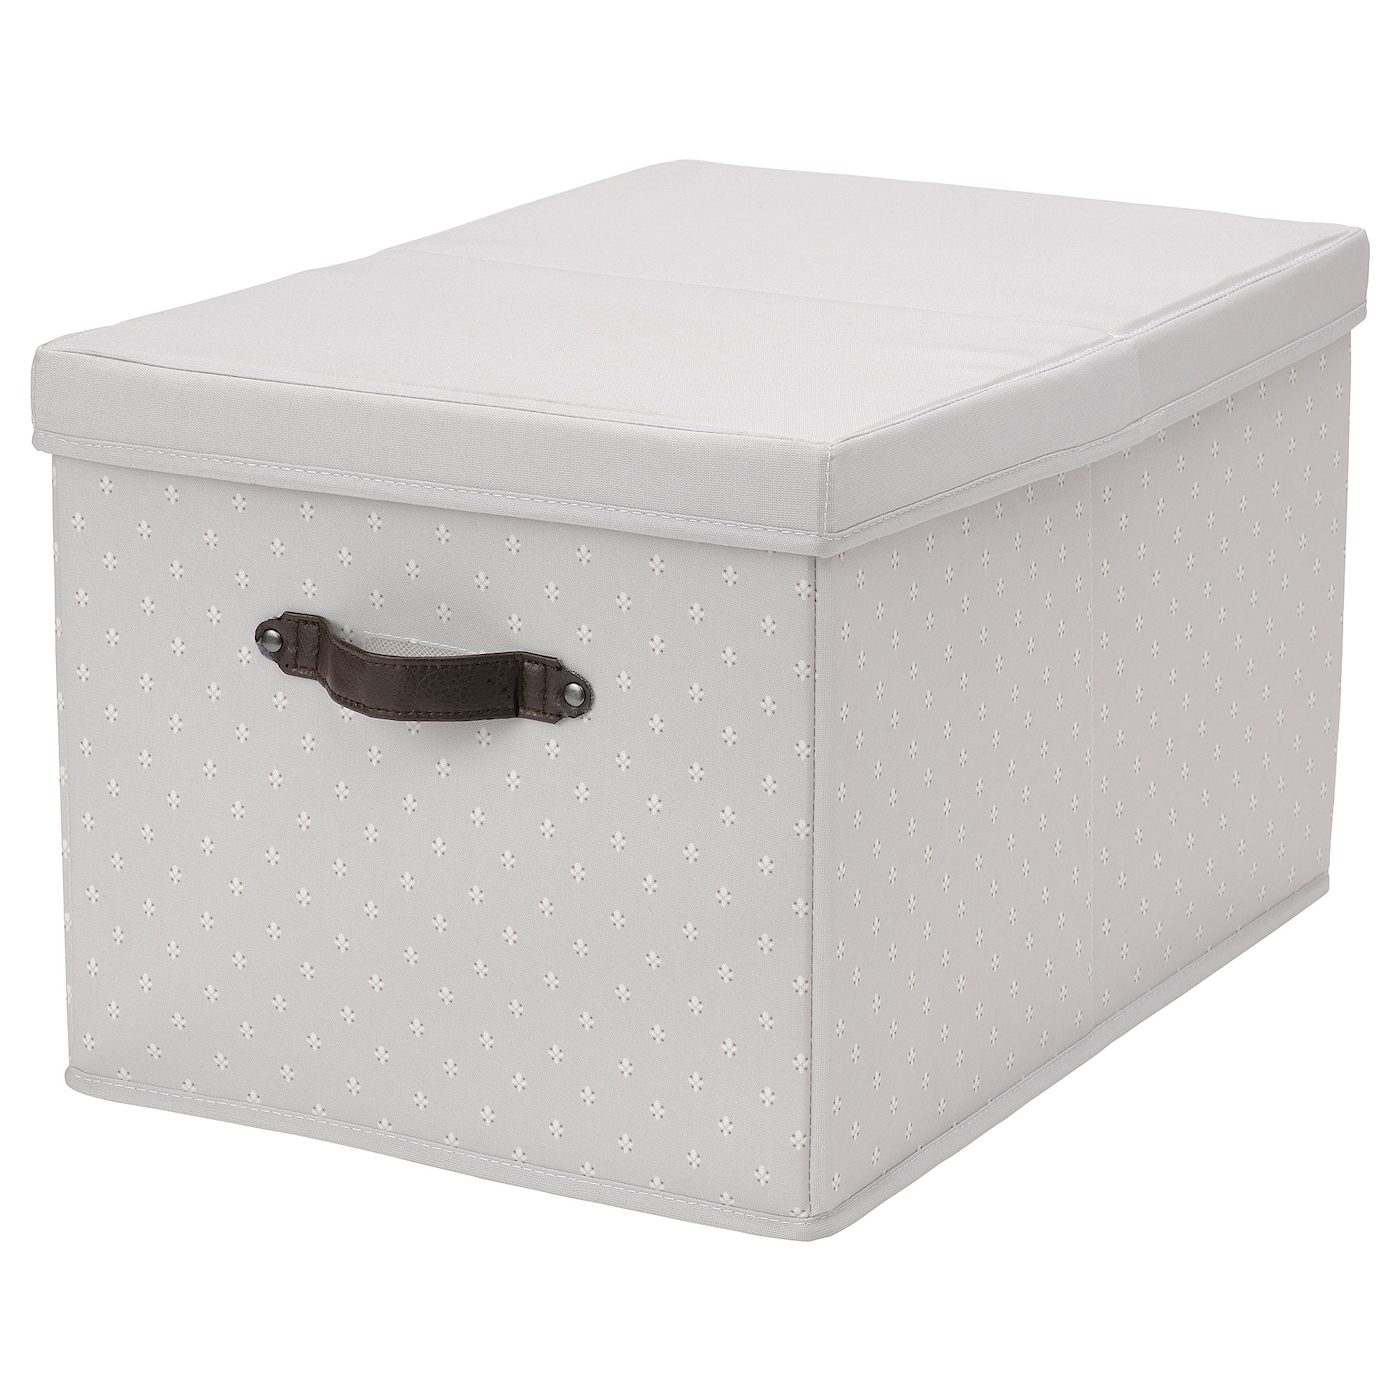 BLÄDDRARE БЛЭДДРАРЕ Коробка с крышкой, серый/с рисунком, 35x50x30 см IKEA цена и фото